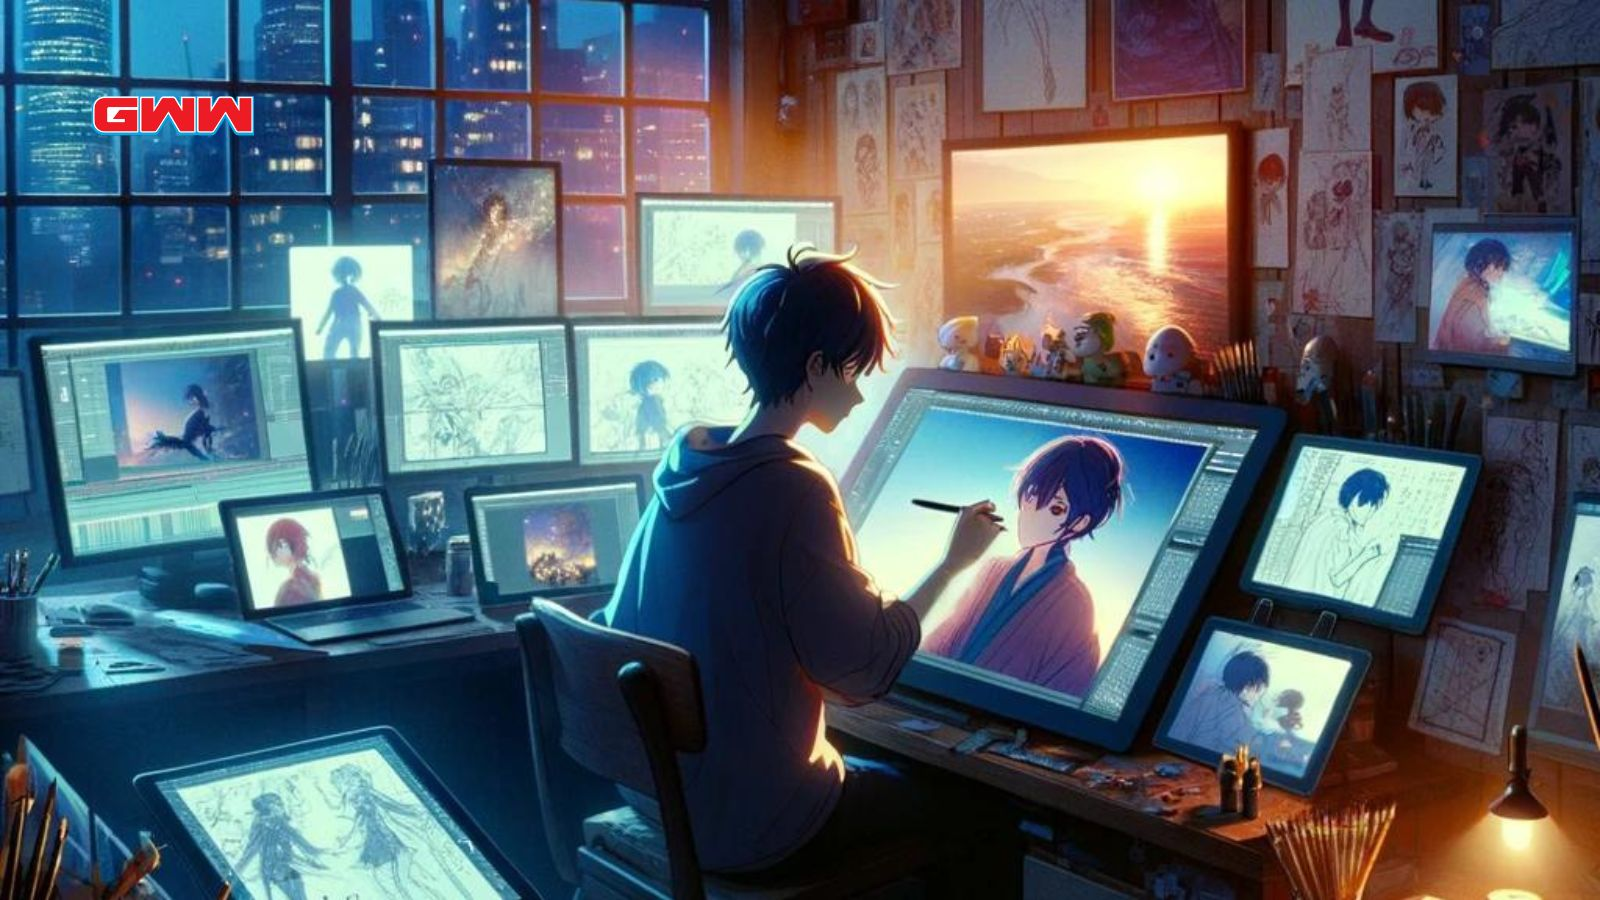 Animator creating anime GIF in a cozy studio